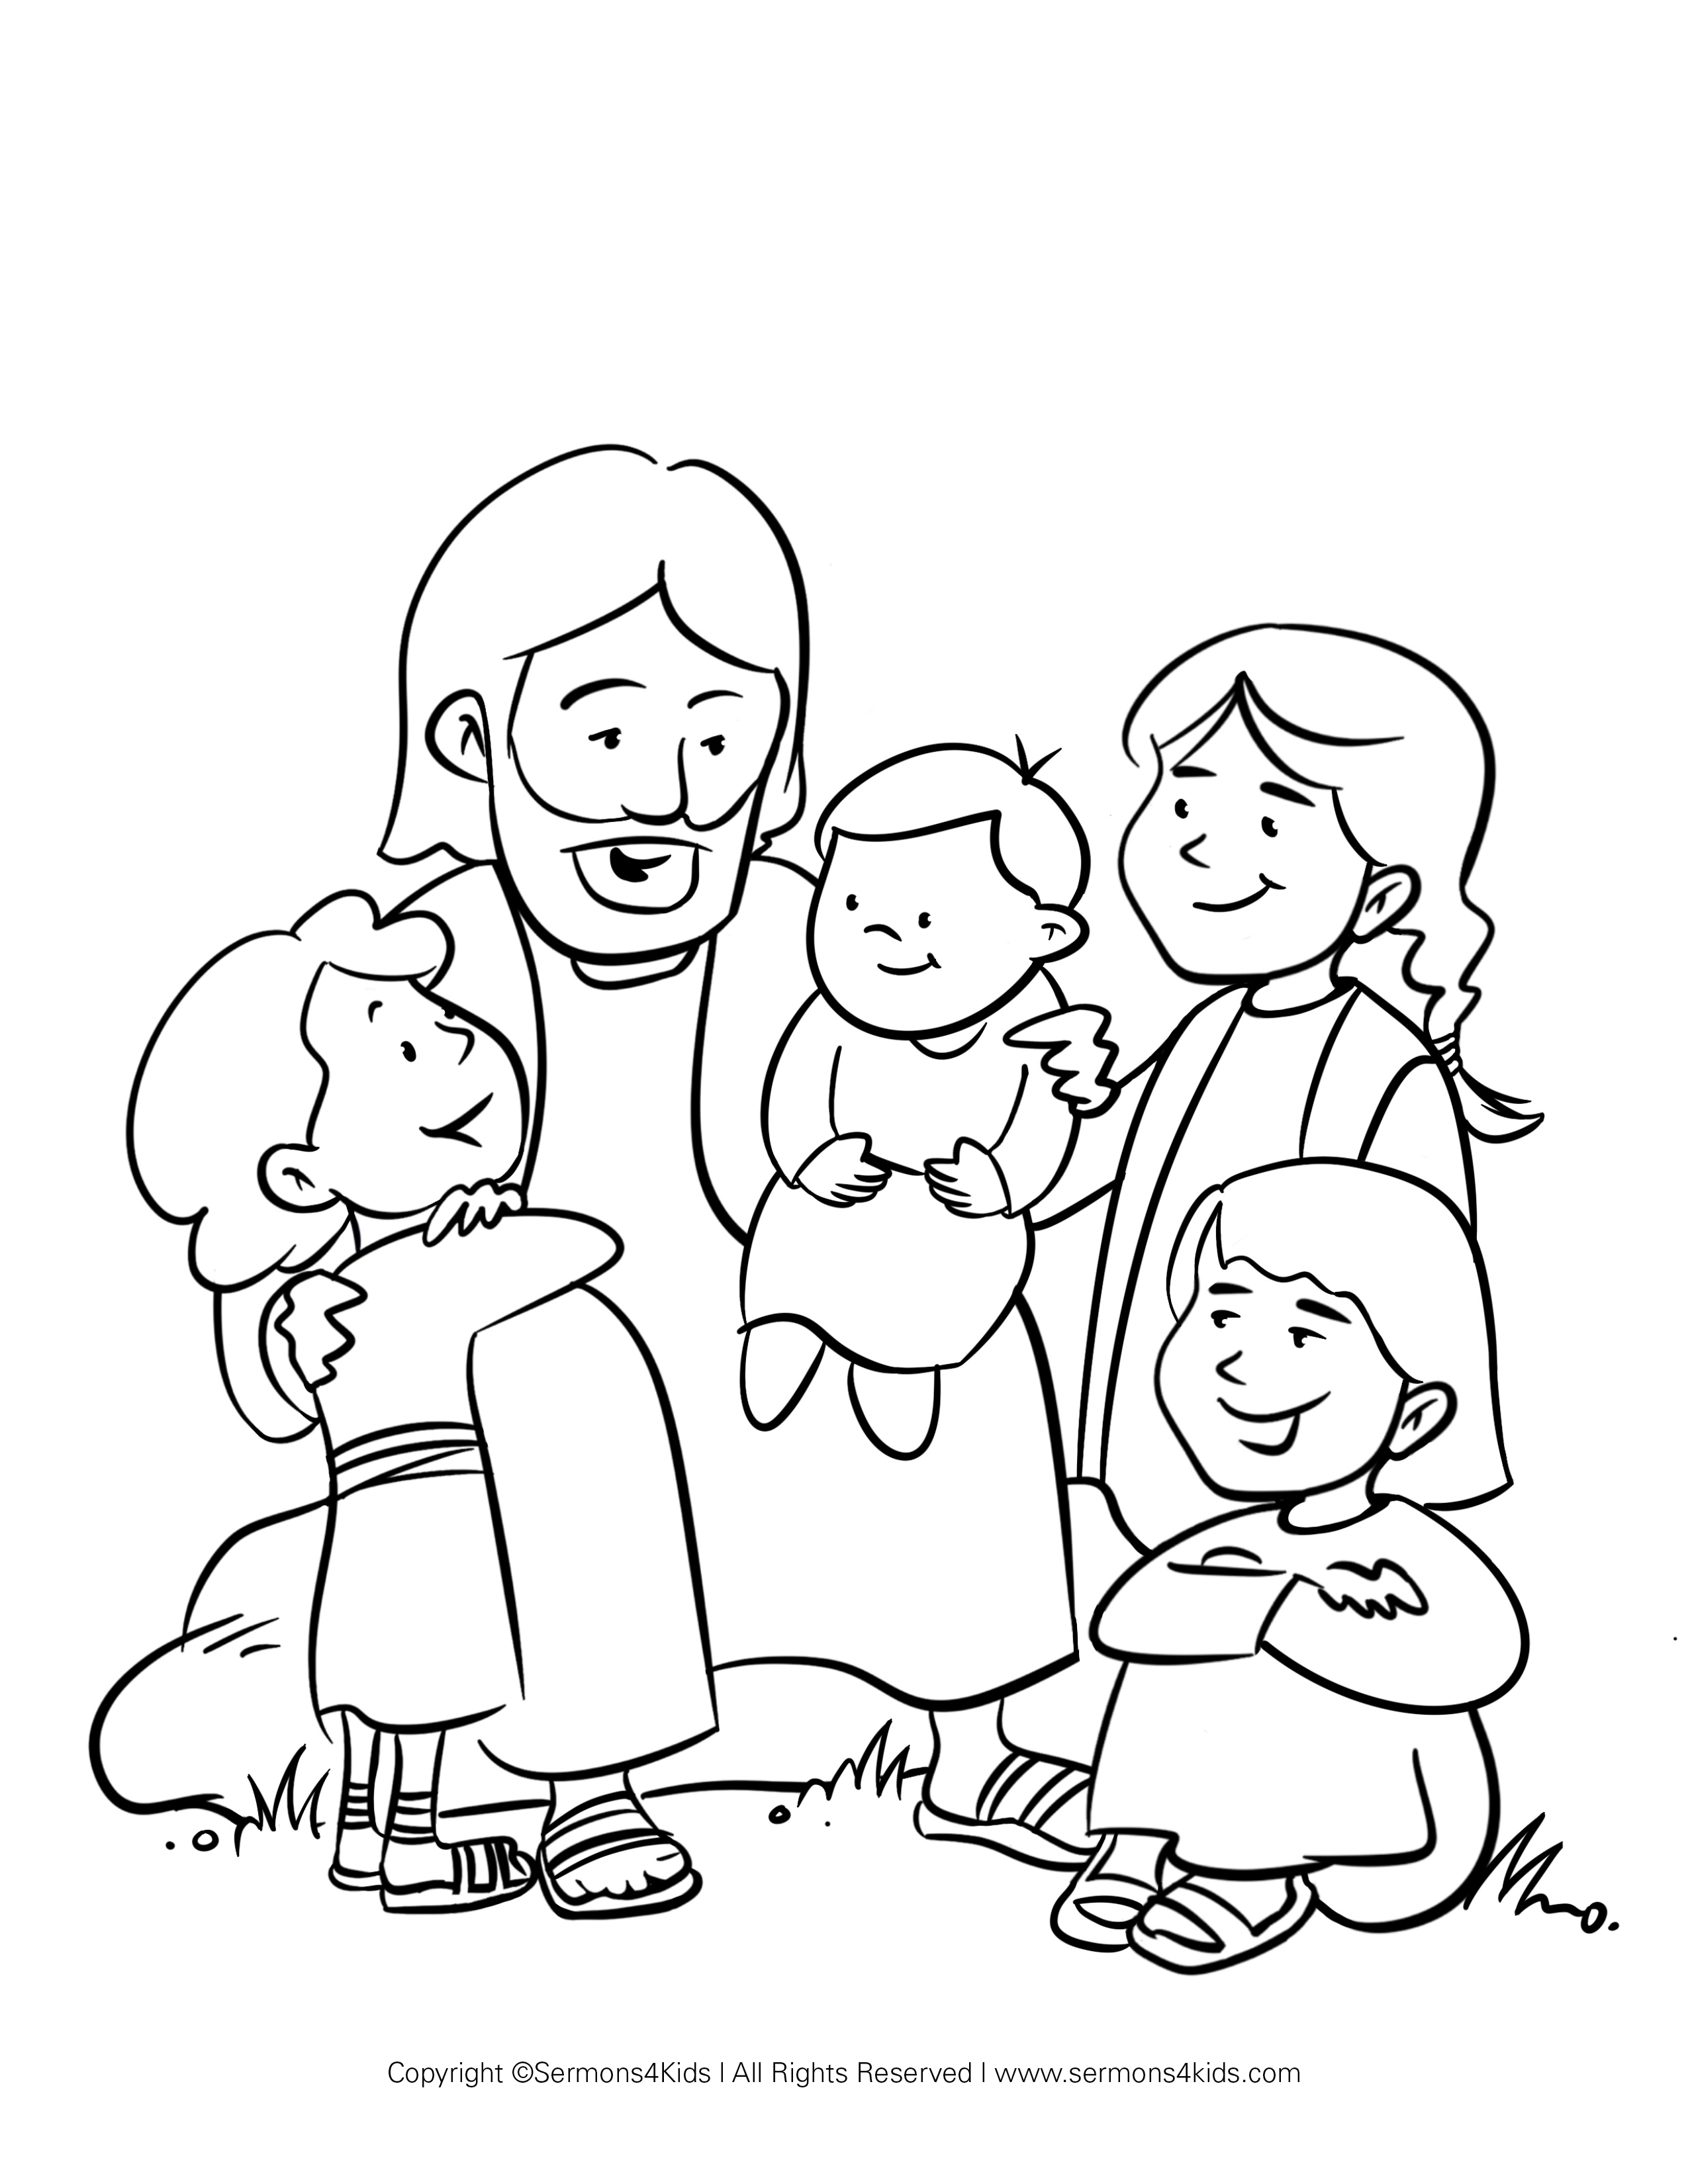 Jesus and the Children #1